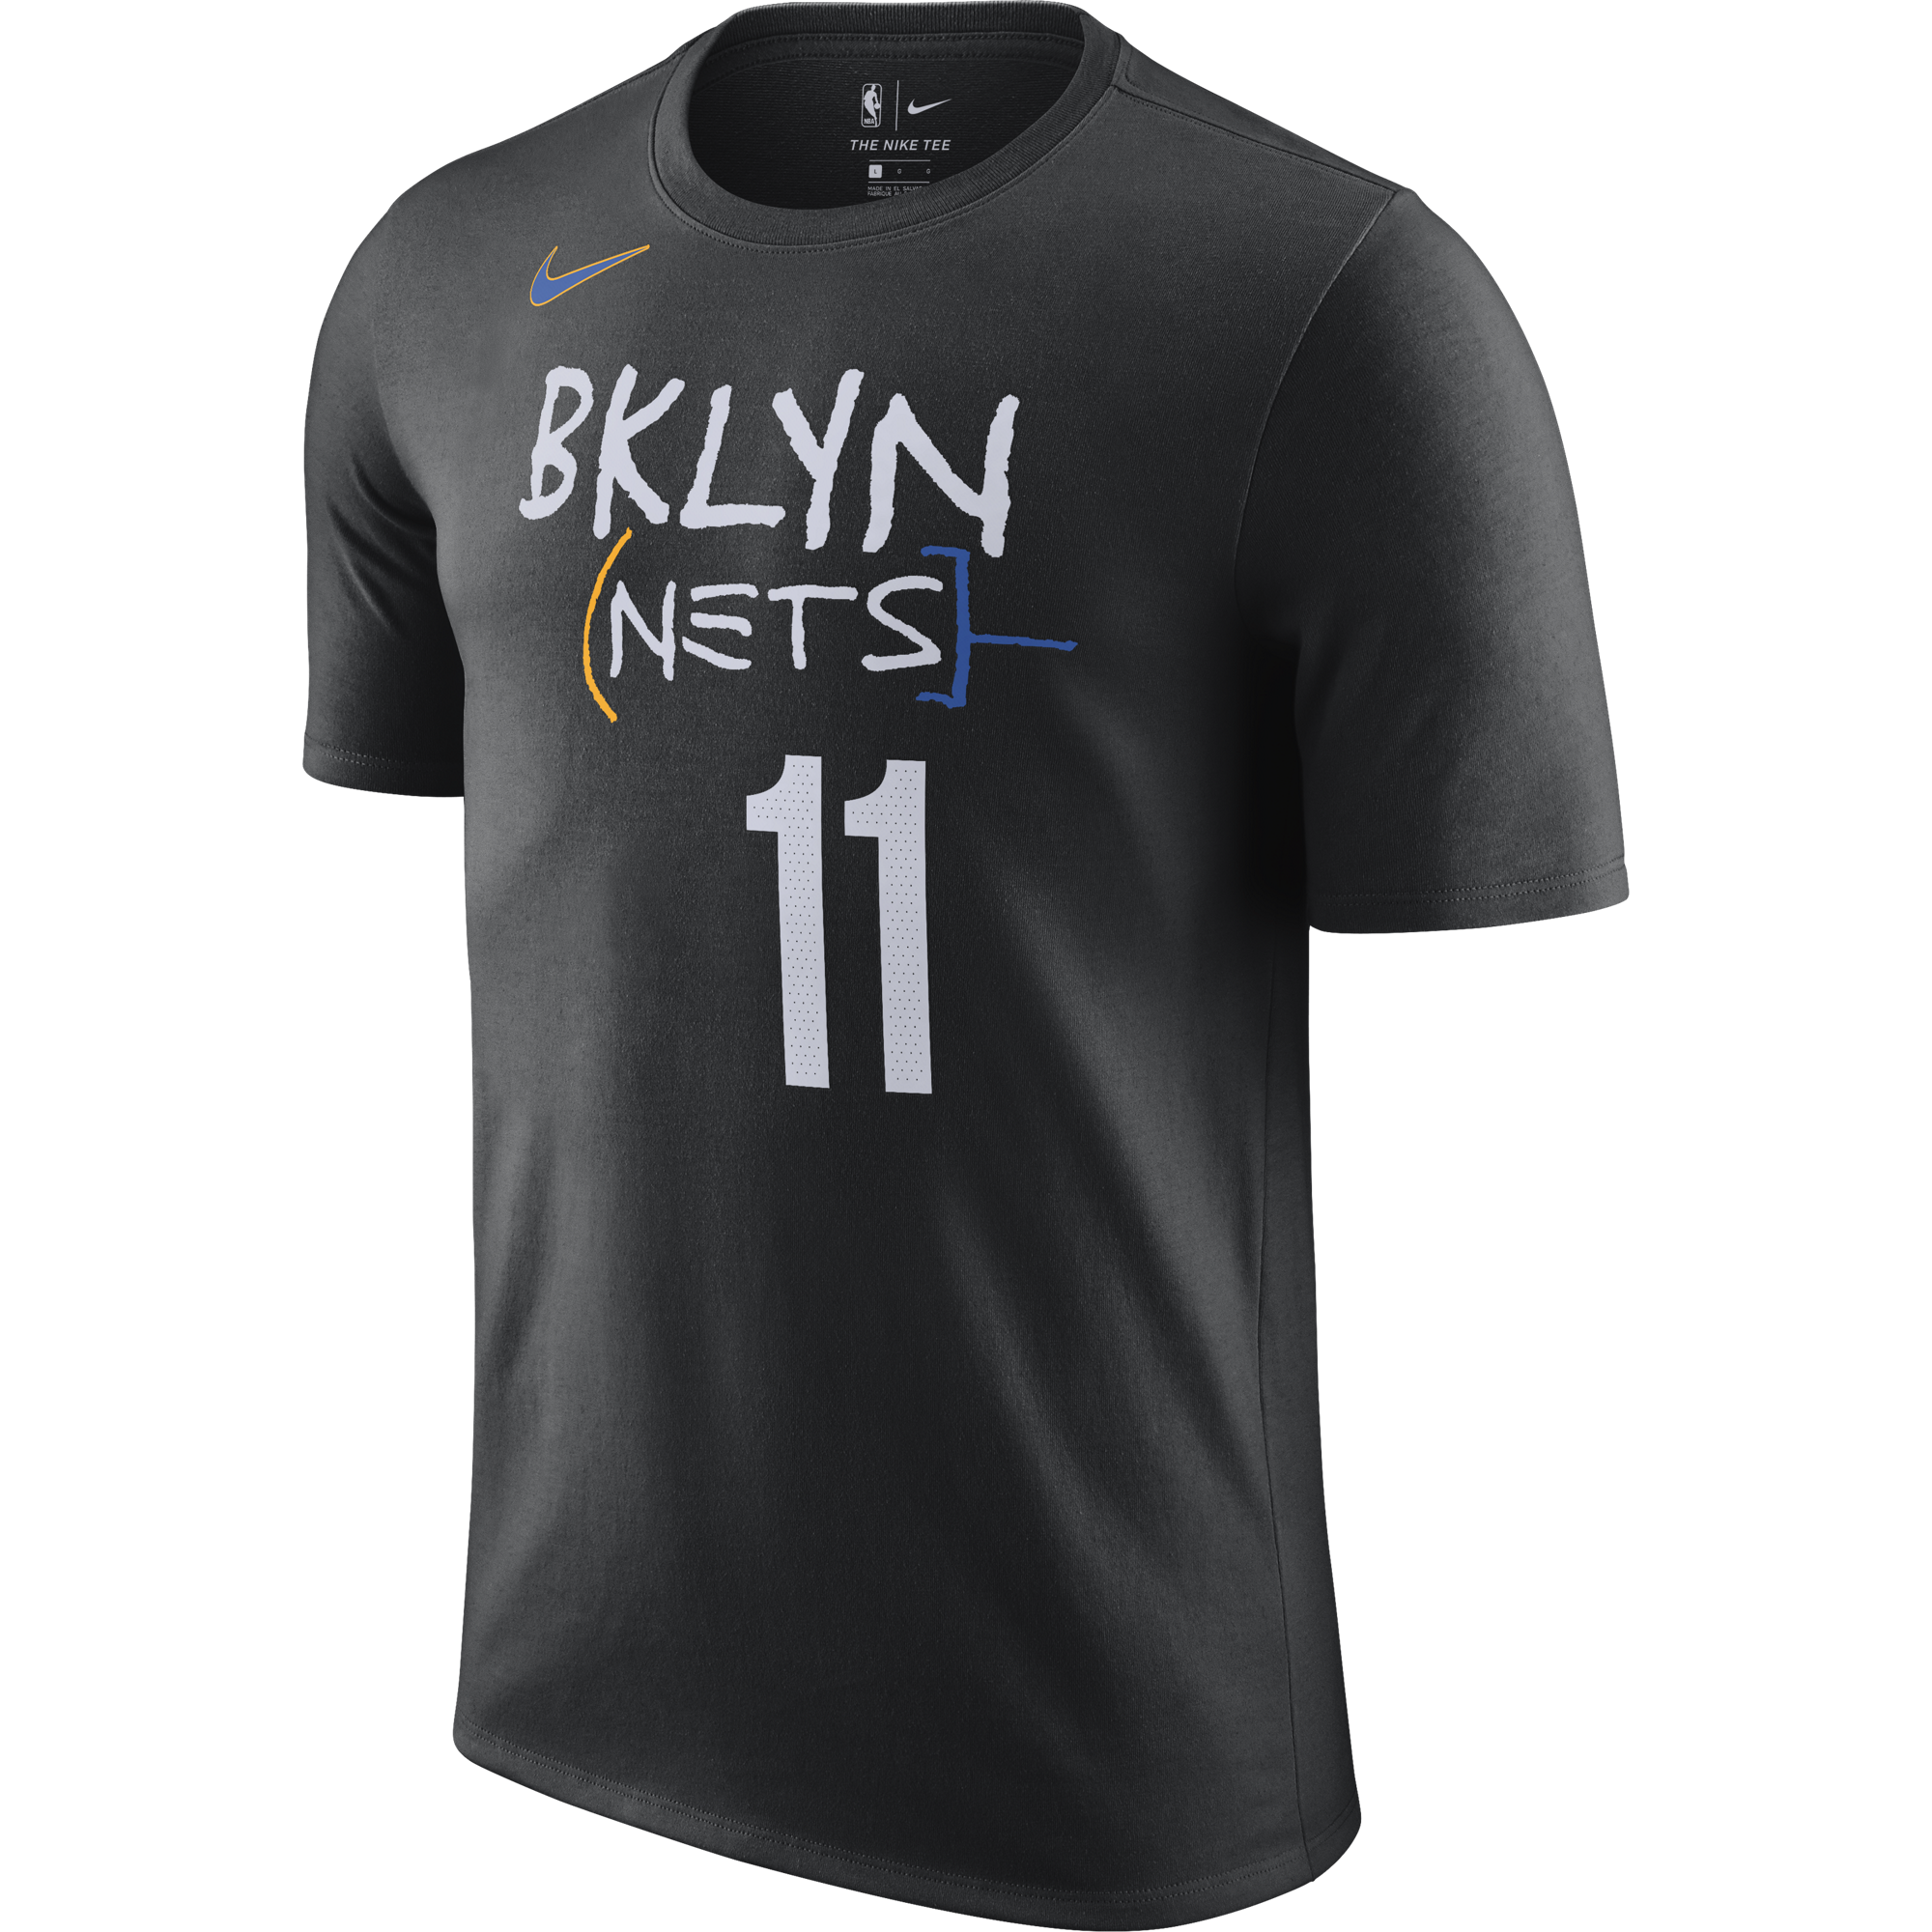 Brooklyn Nets nba 11 Irving retro basketball swingman city jersey